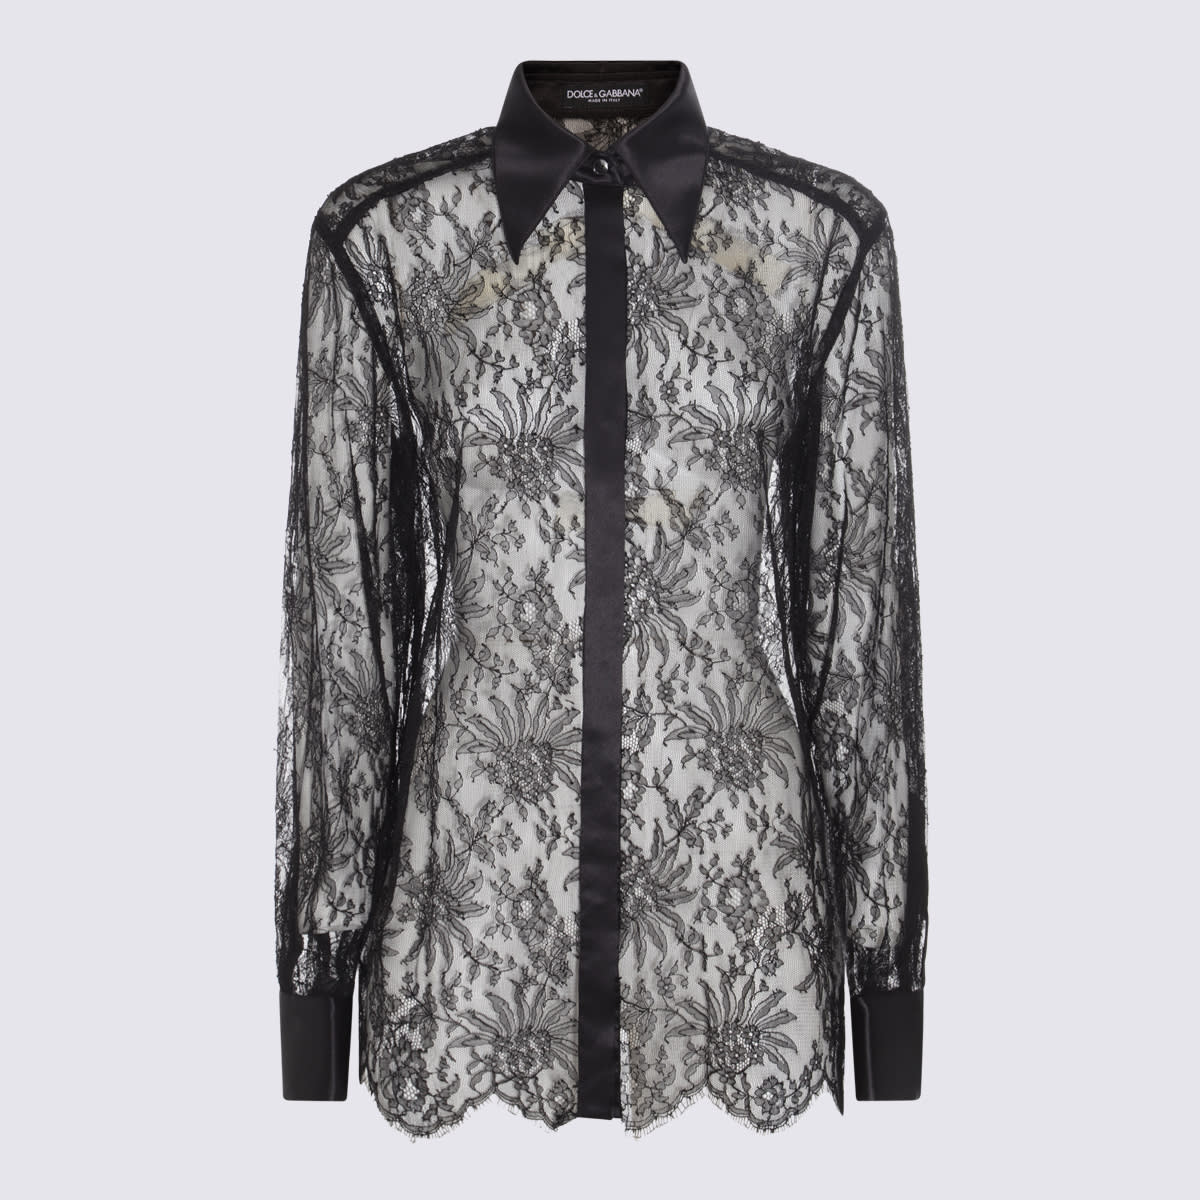 Dolce & Gabbana Black Lace Chantilly Shirt